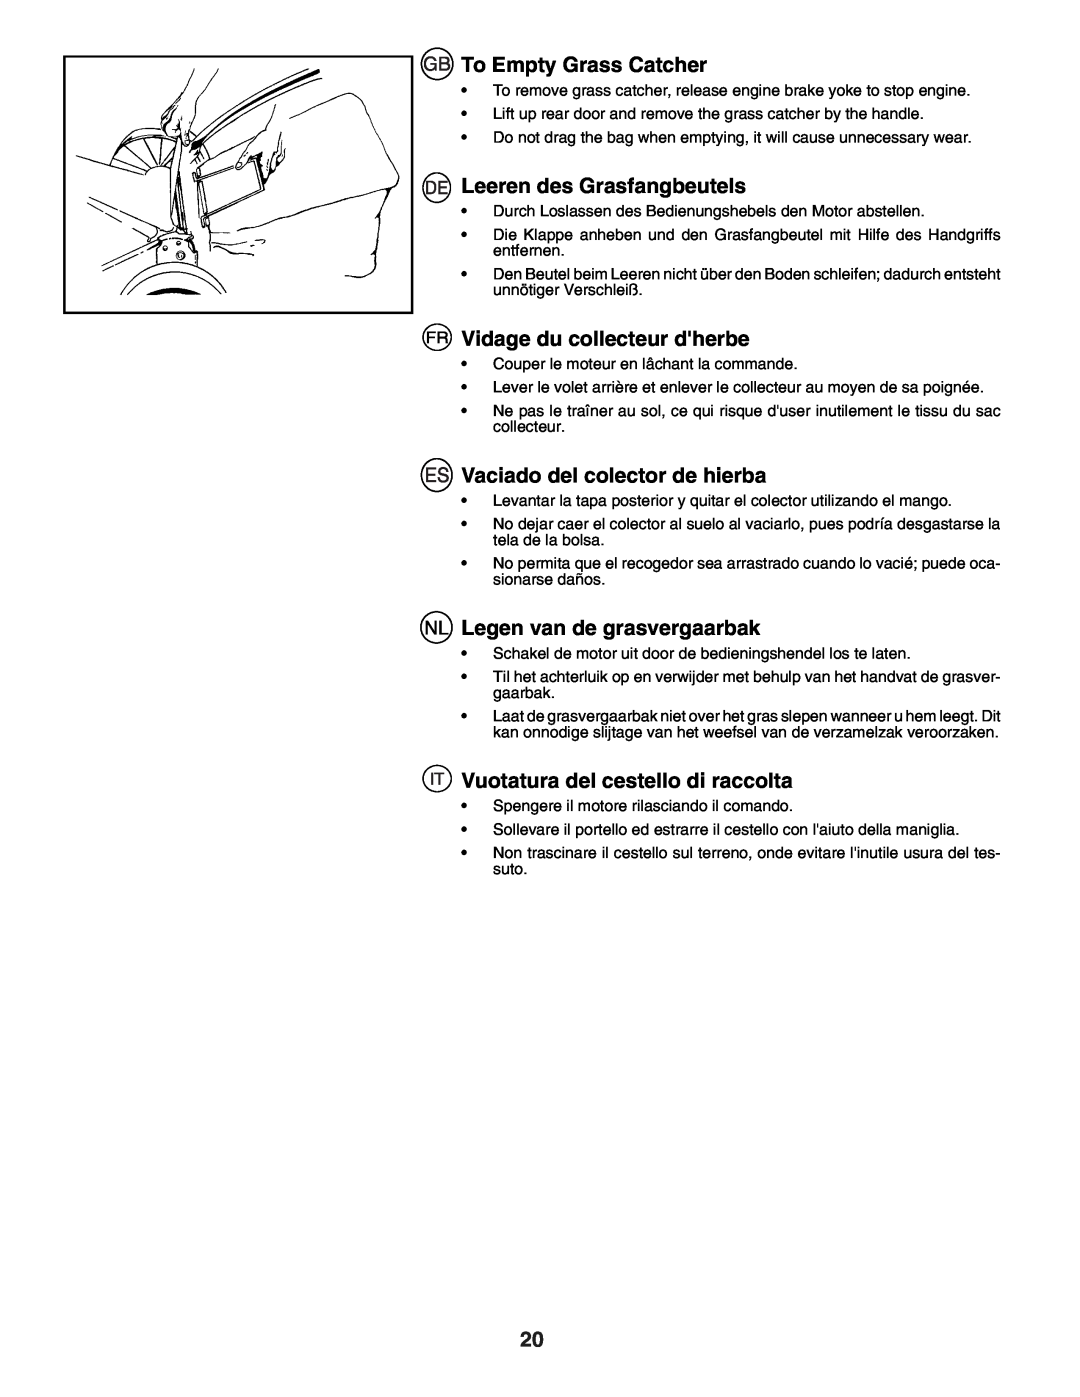 Husqvarna J50R instruction manual To Empty Grass Catcher, Leeren des Grasfangbeutels, Vidage du collecteur dherbe 